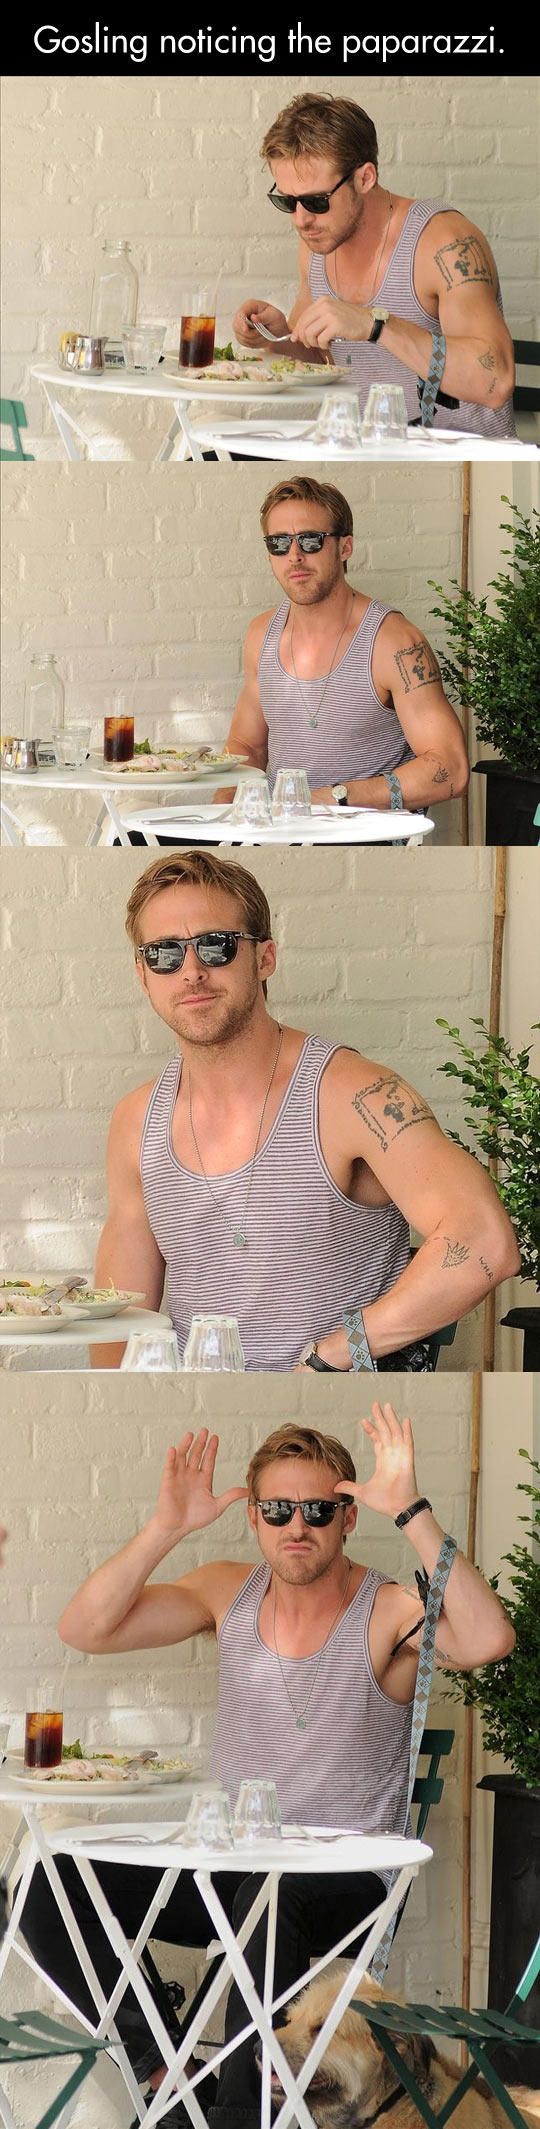 Ryan Gosling noticing the paparazzi.